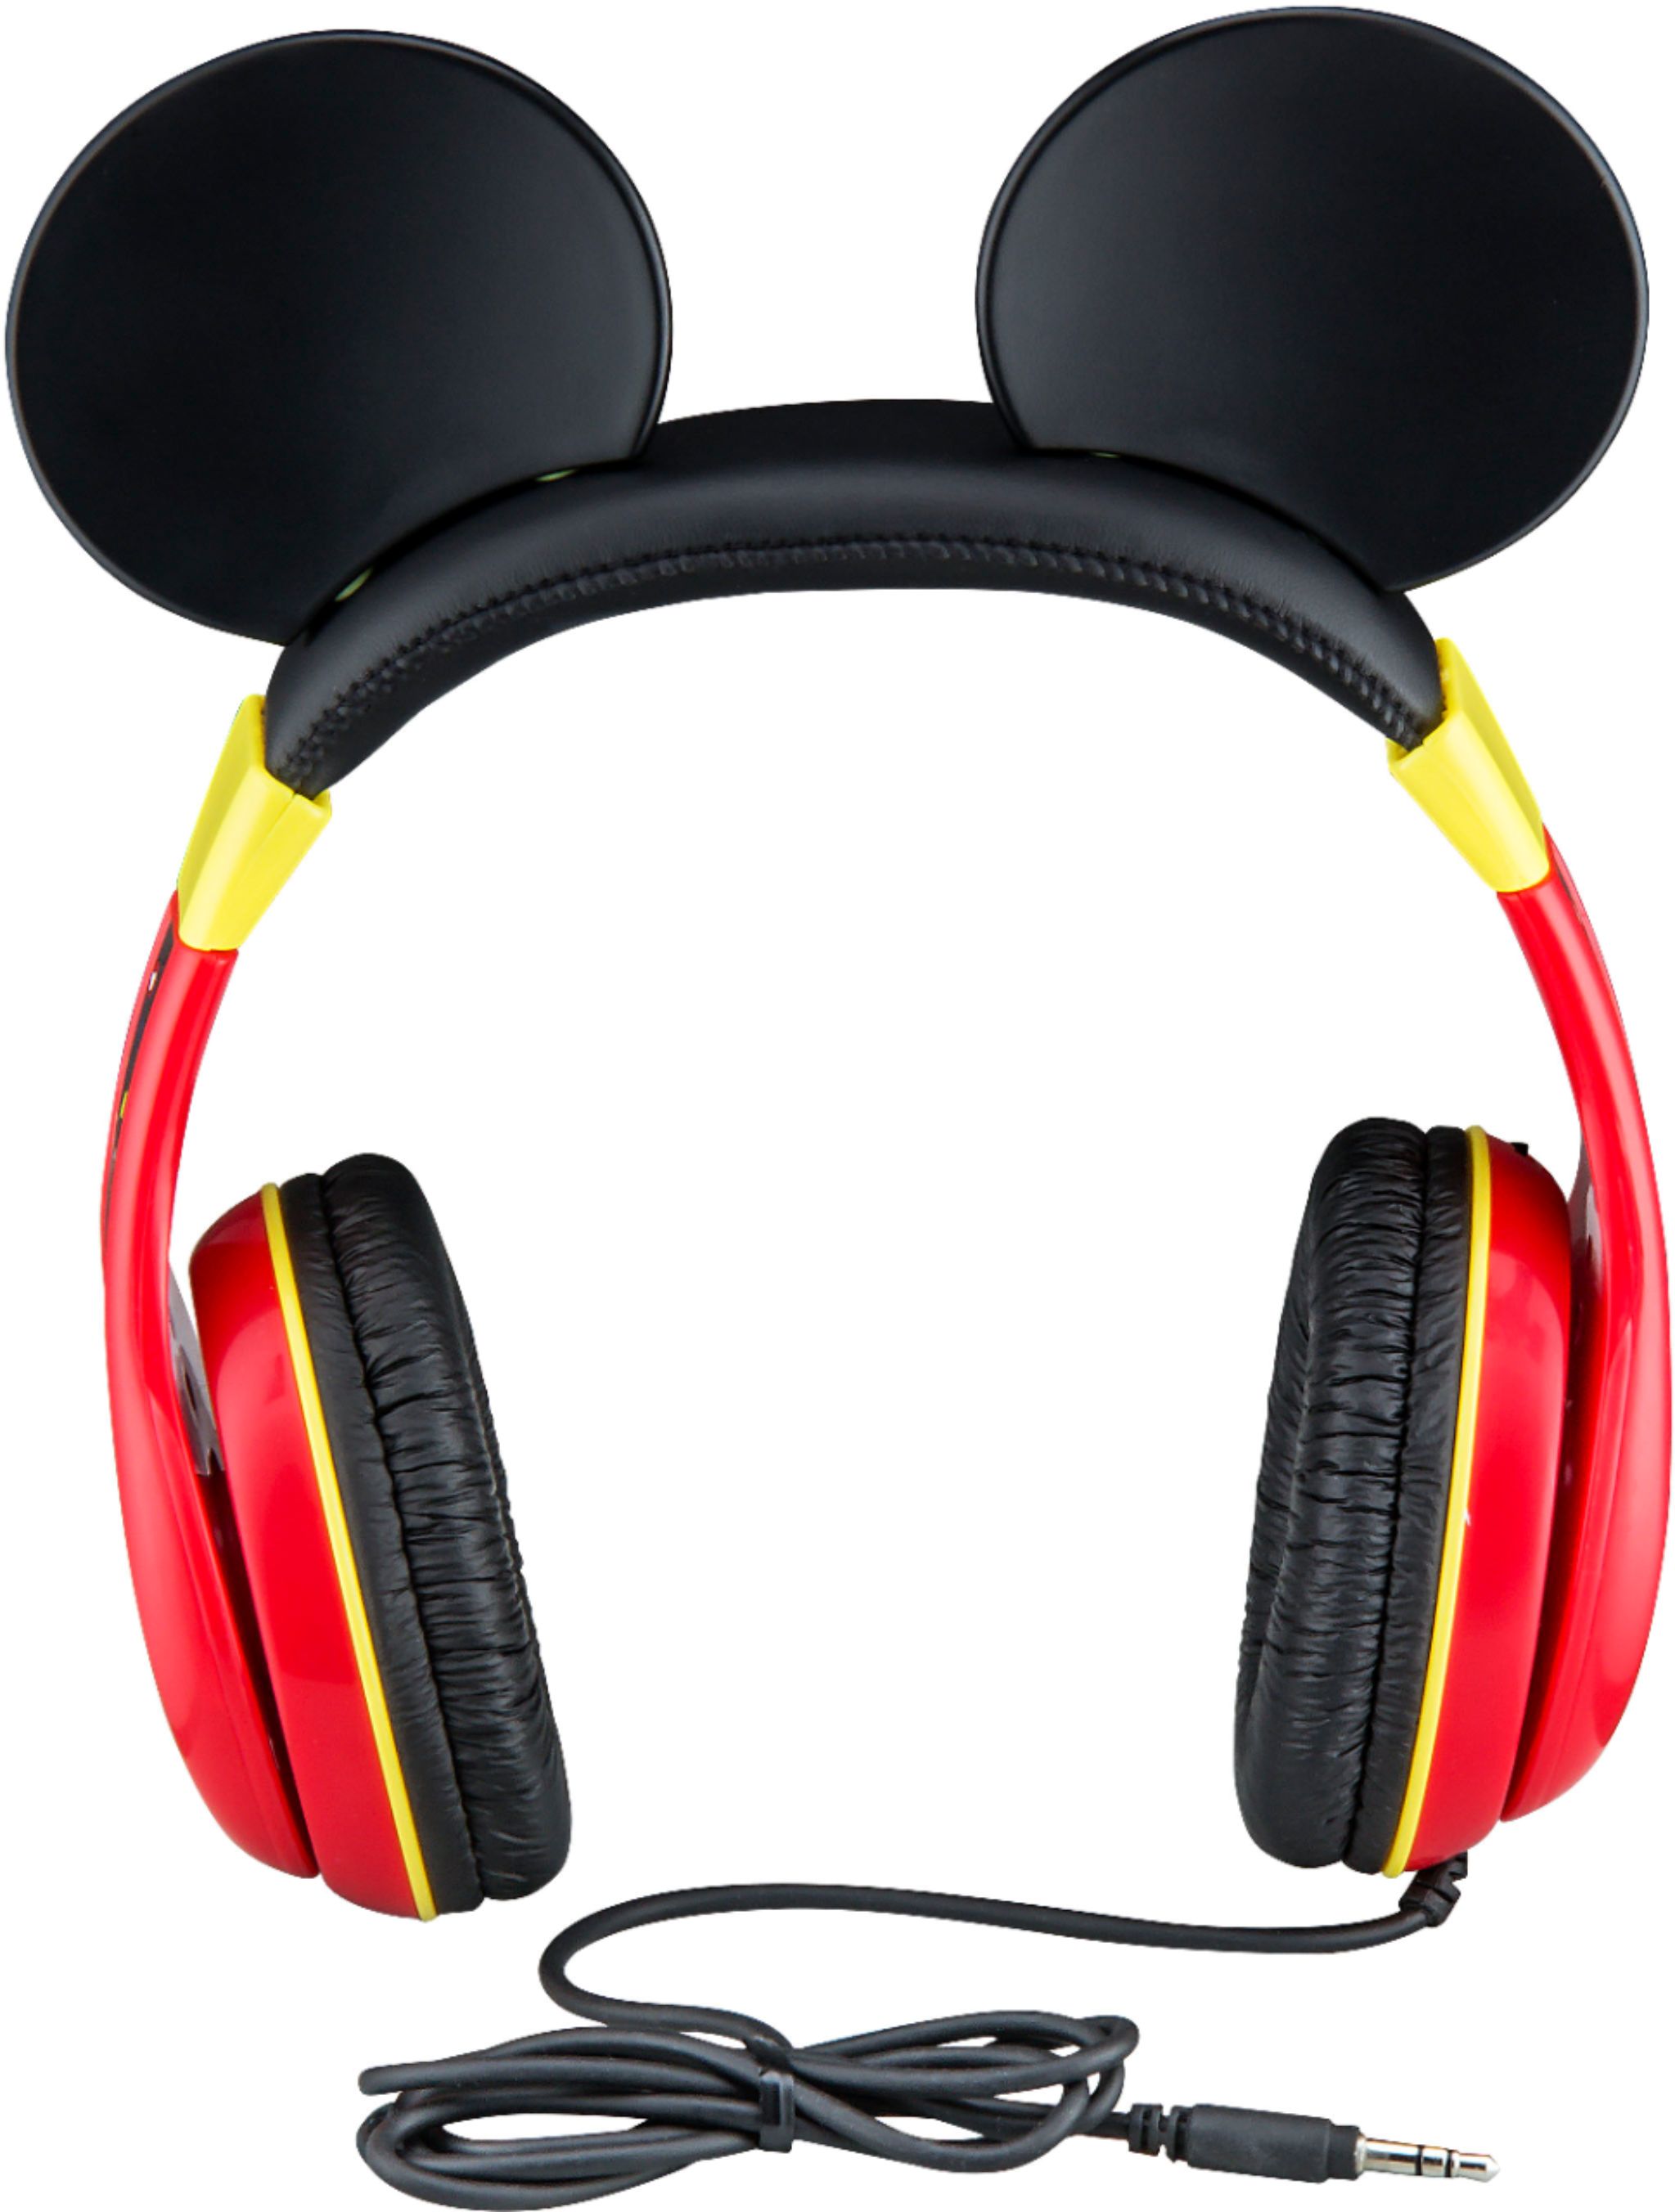 mickey mouse headphones best buy